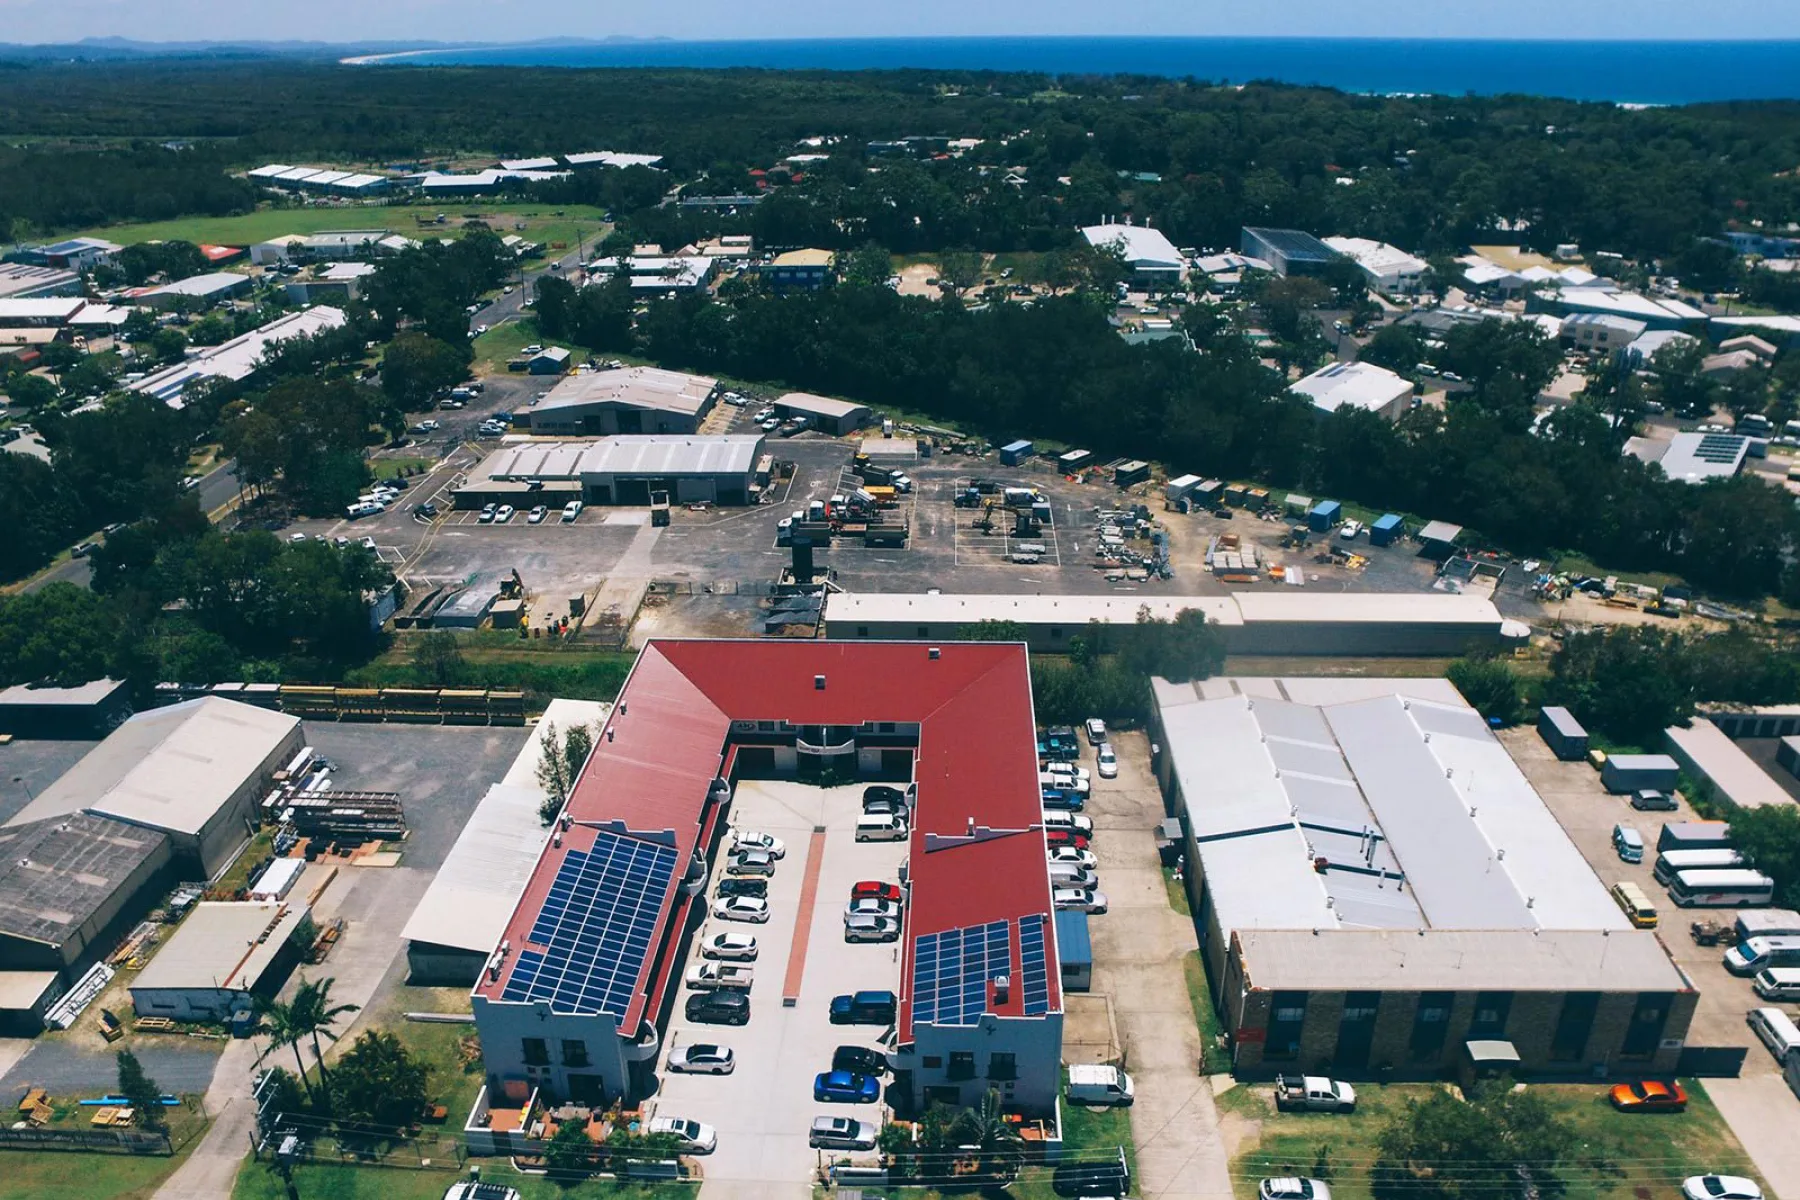 Byron Industrial Precinct Aerial Image via Sustainable Valley